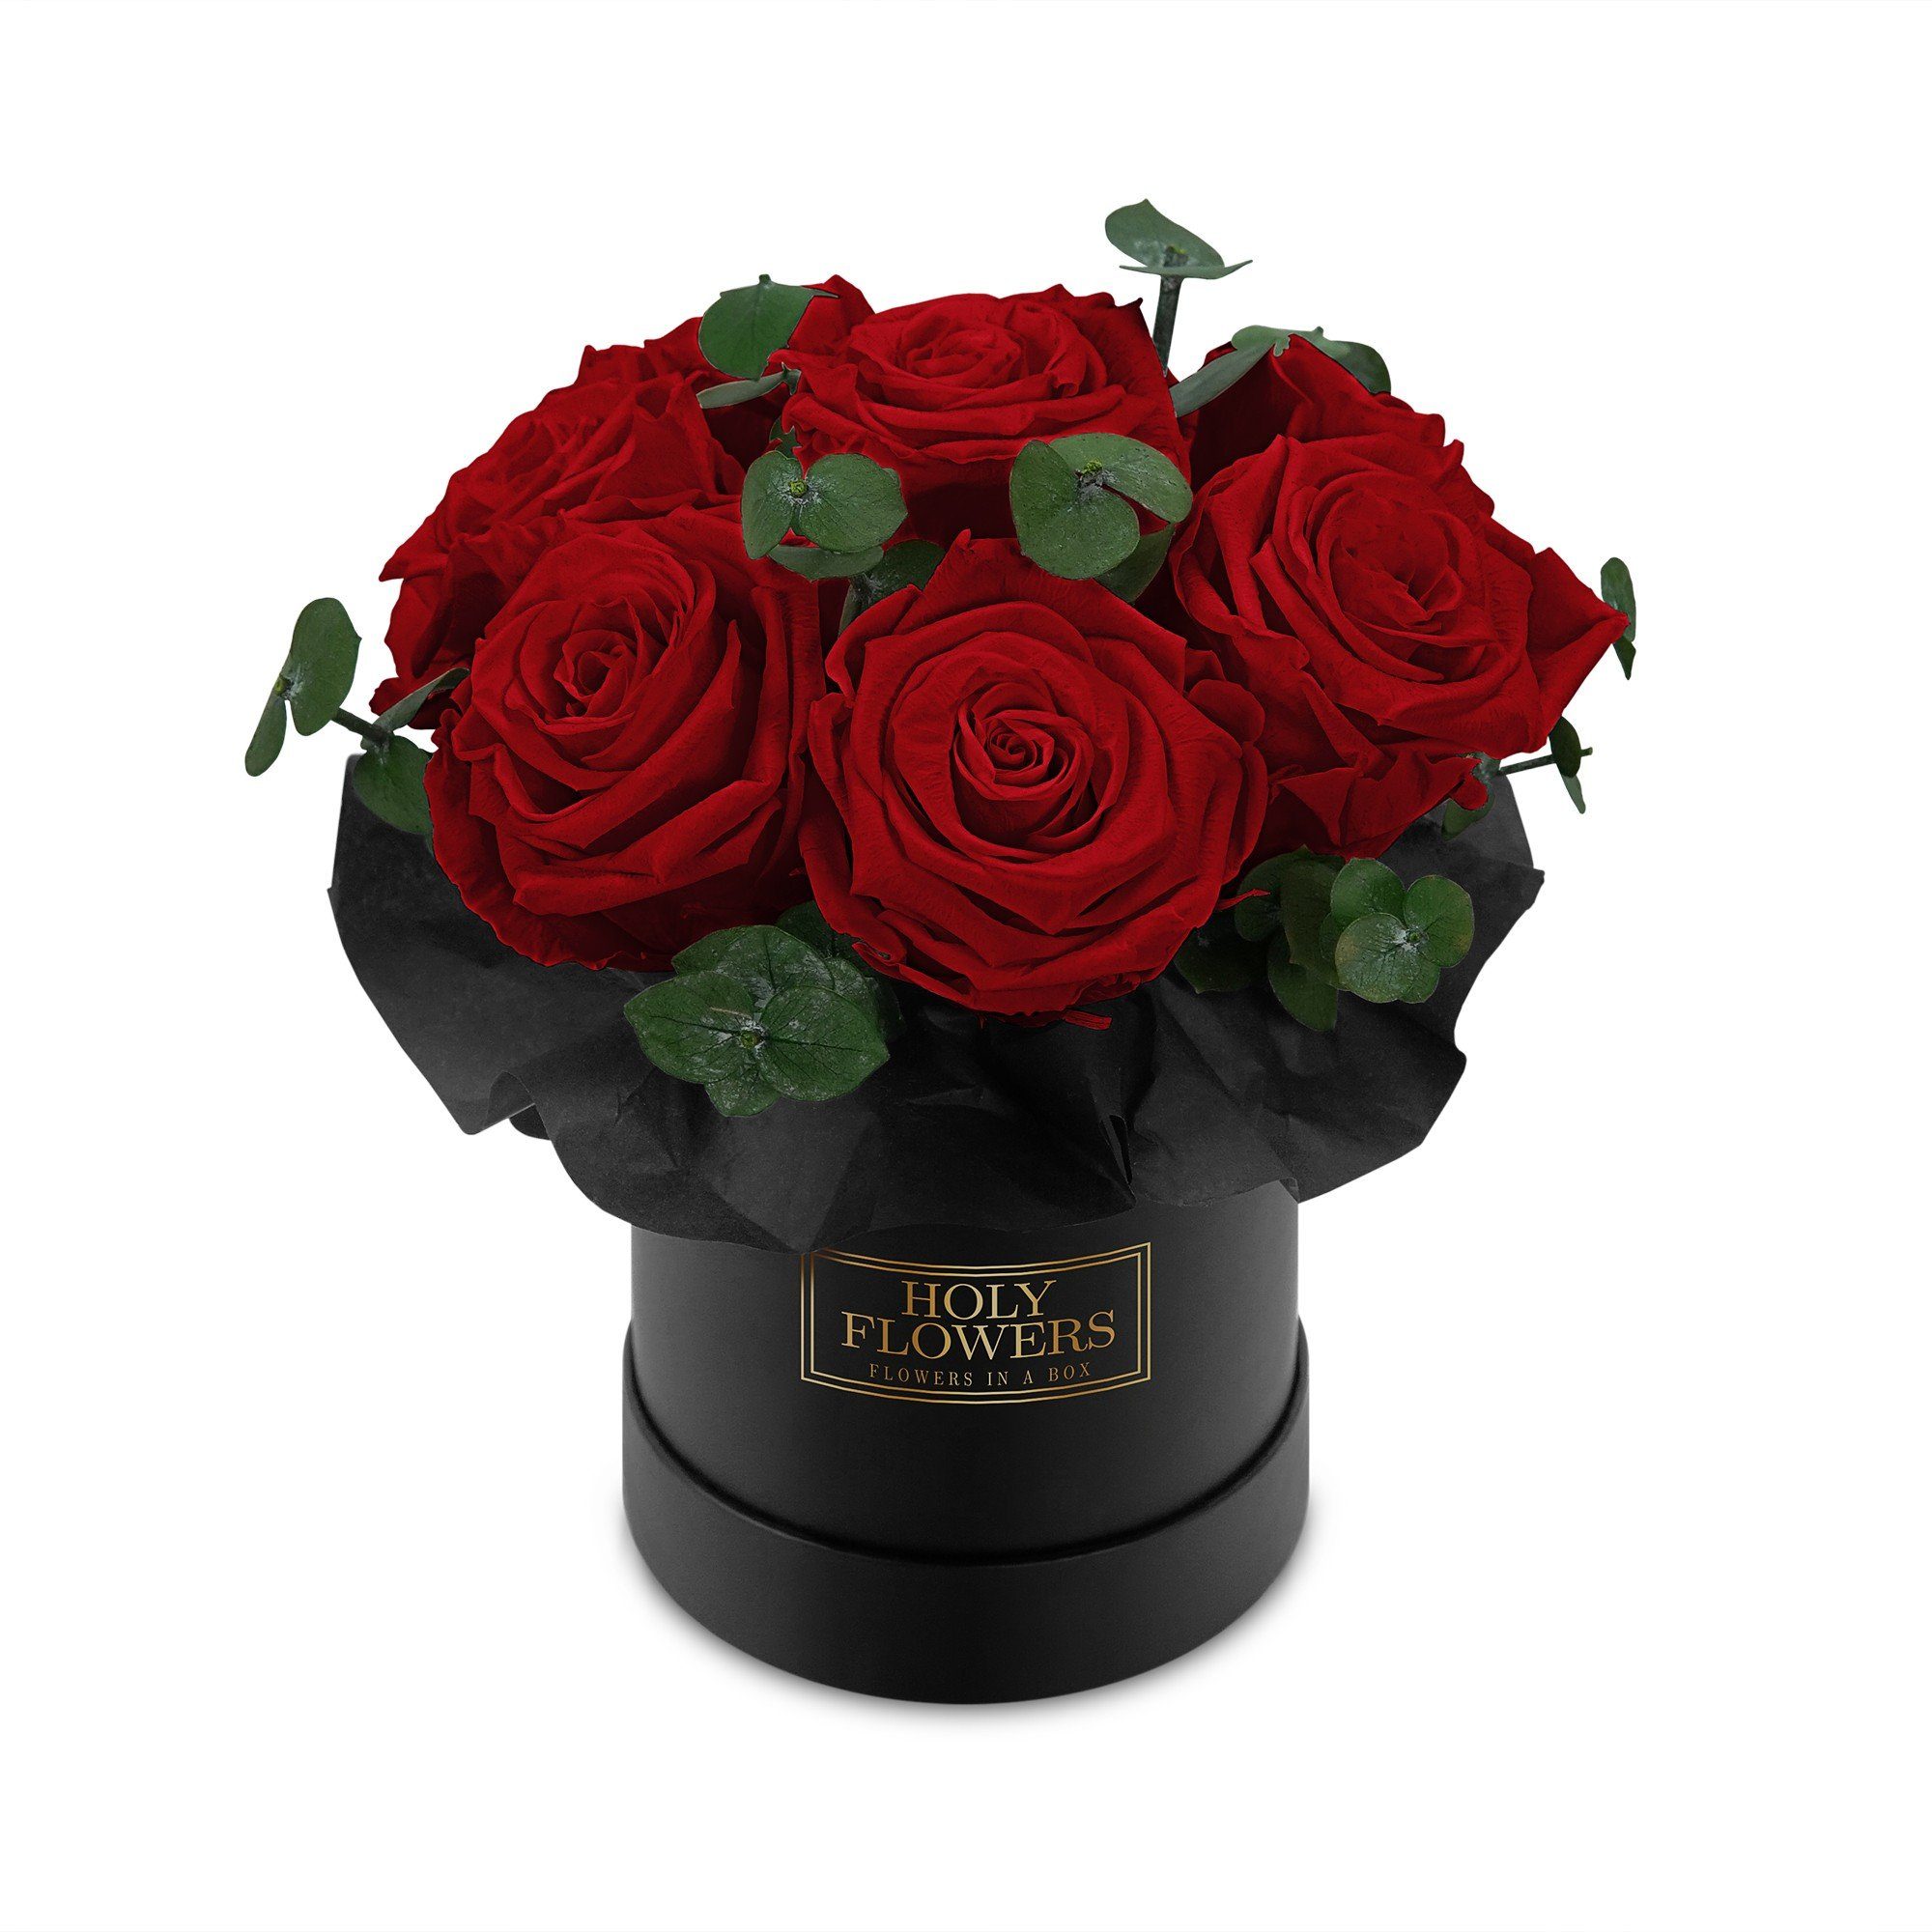 Kunstblume Rosenbox Bouquet mit 7-9 Infinity Rosen I 3 Jahre haltbar I Echte, duftende konservierte Blumen I by Raul Richter Rose, Holy Flowers Rot